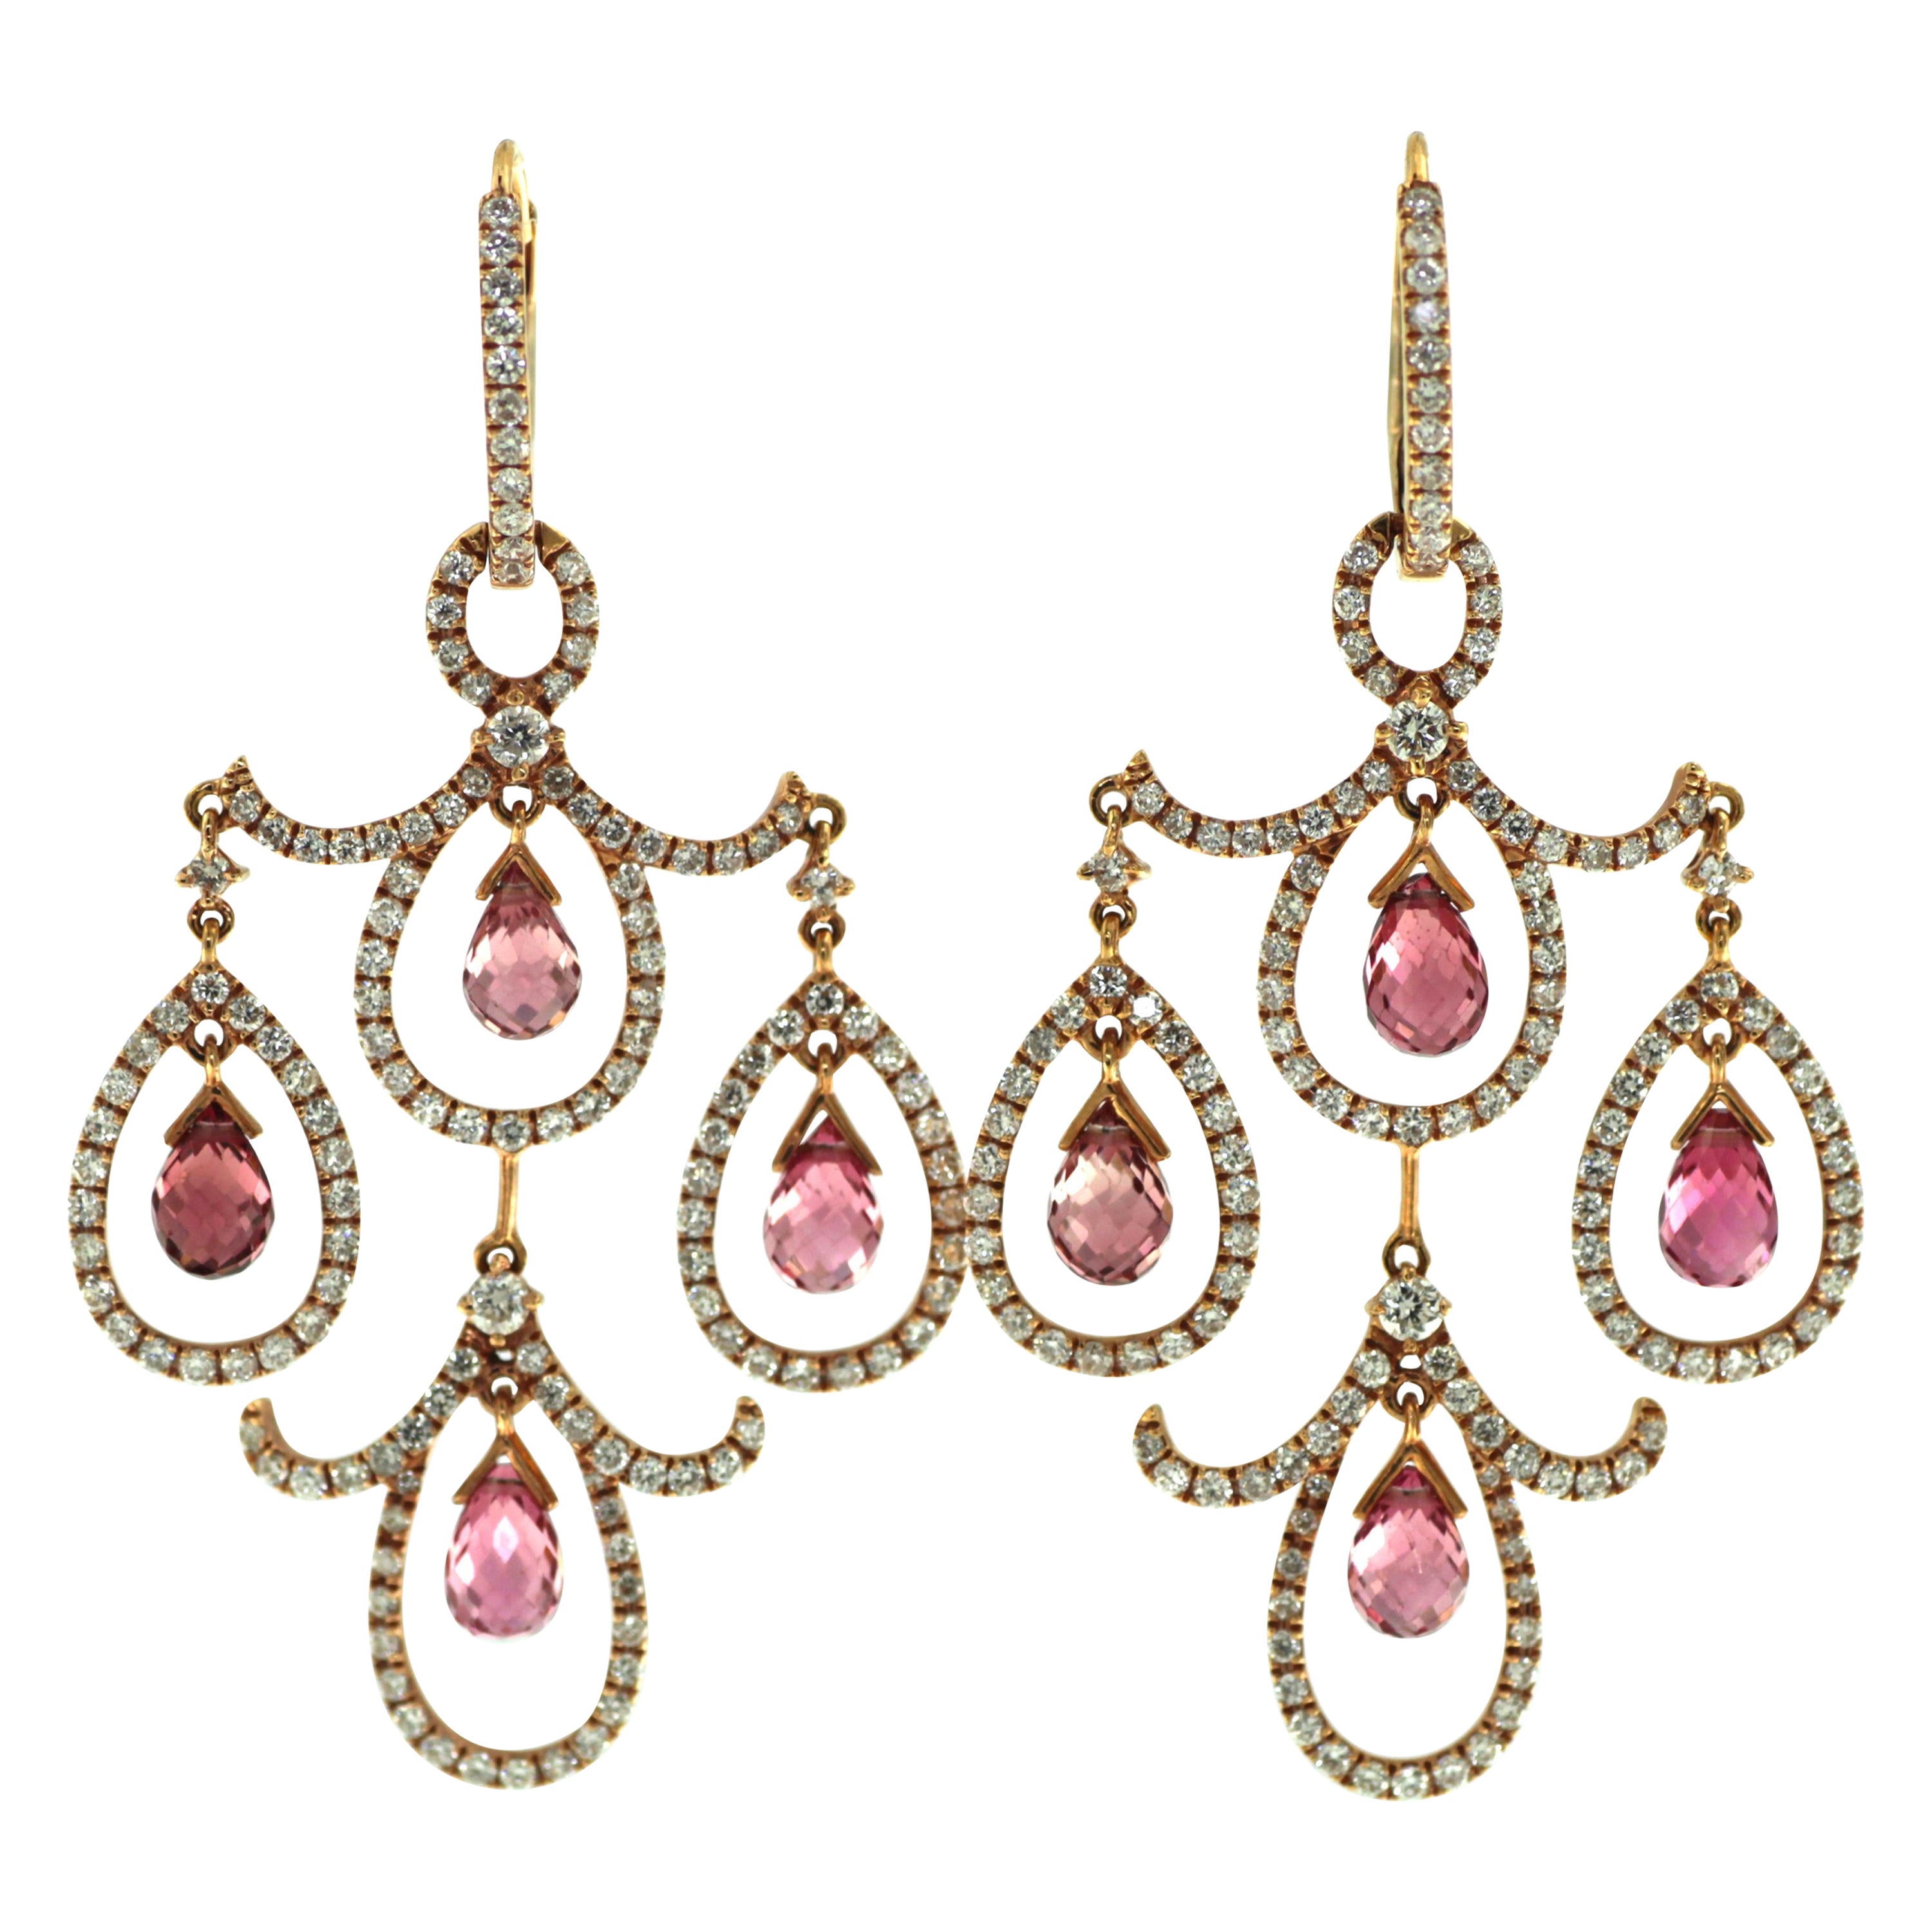 Vintage 7.35 carat Briolette and Diamond Chandelier Earring in 18K Rose Gold im Angebot